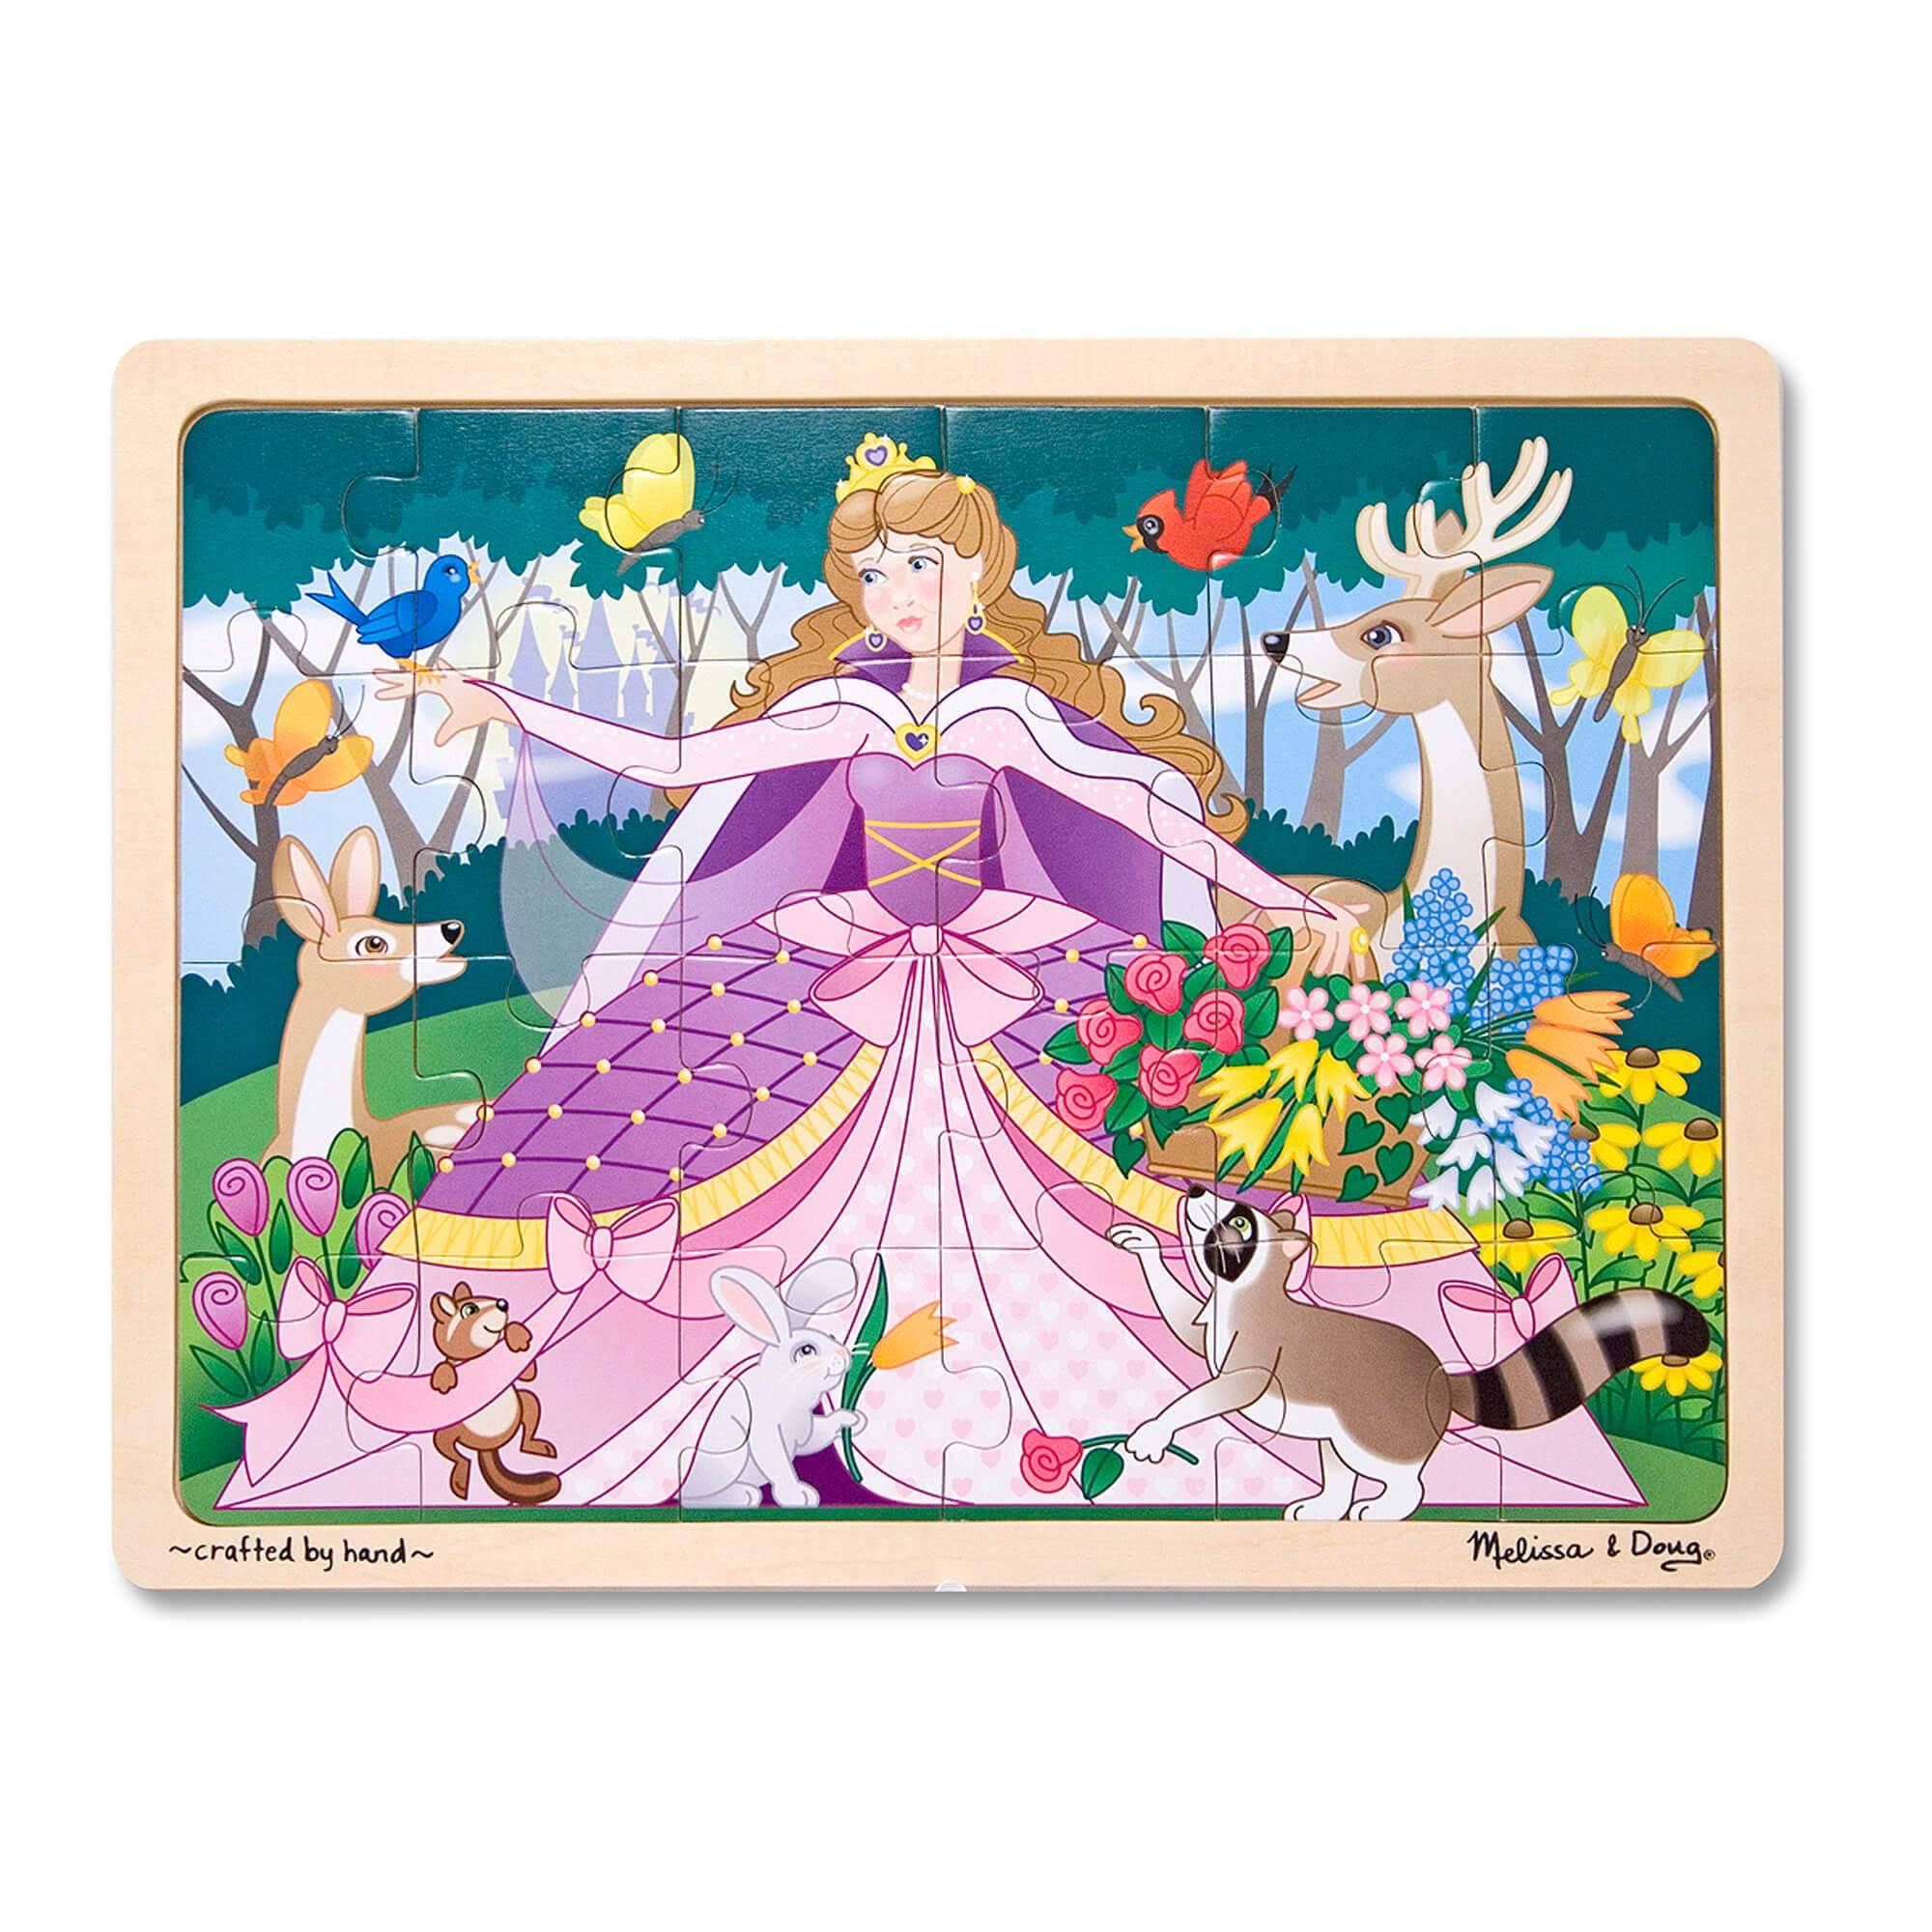 Melissa and Doug Wooden Jigsaw Puzzle - Woodland Princess, 24pcs